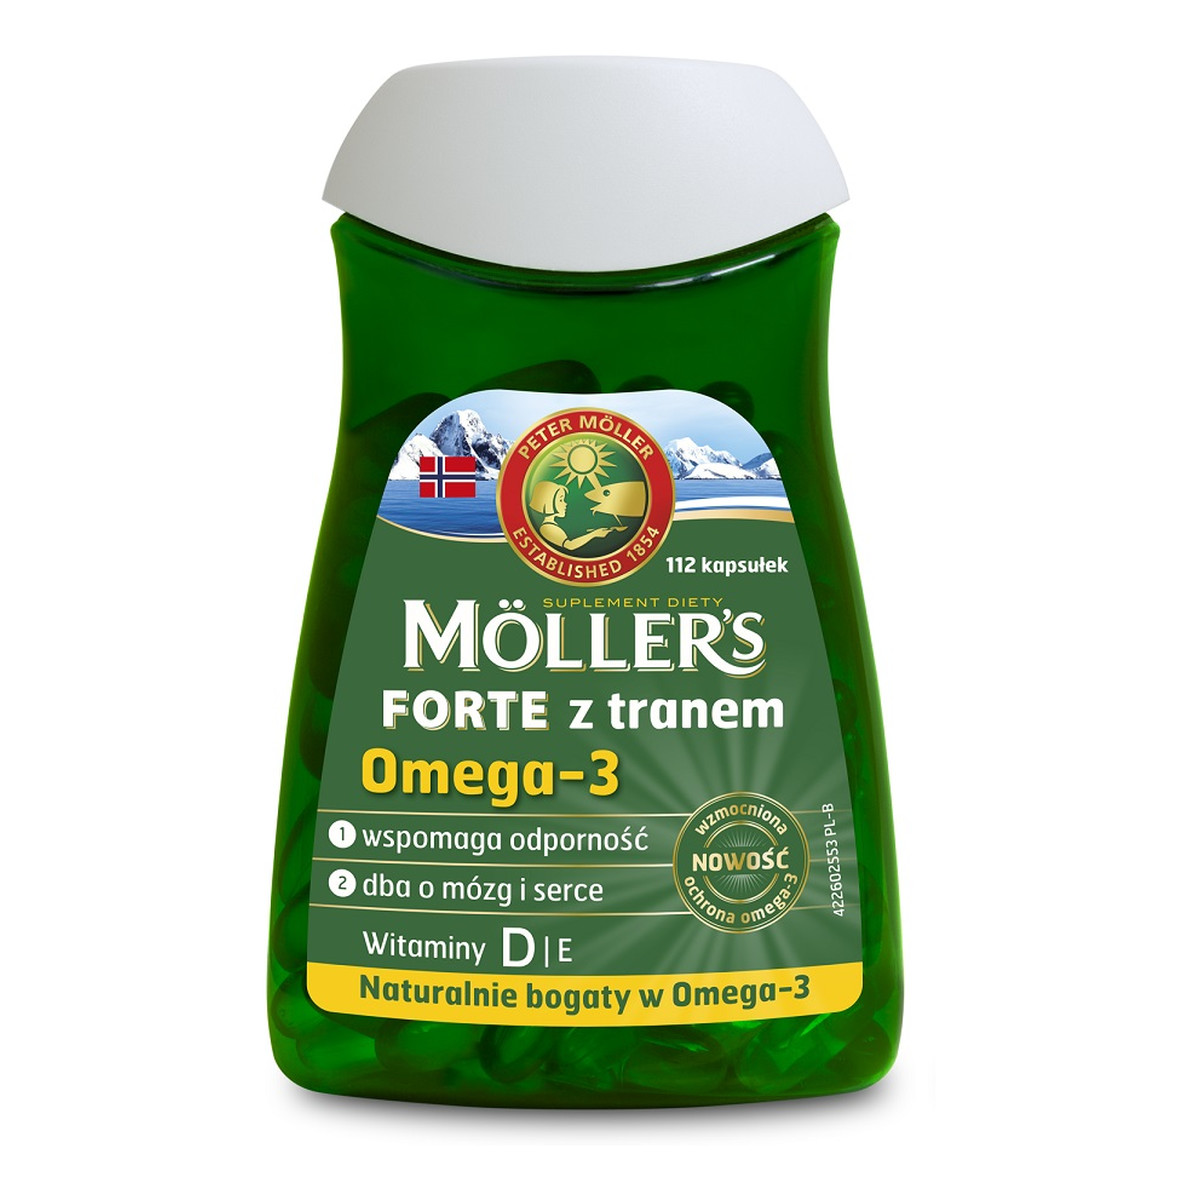 Moller's Forte z tranem suplement diety 112 kapsułek